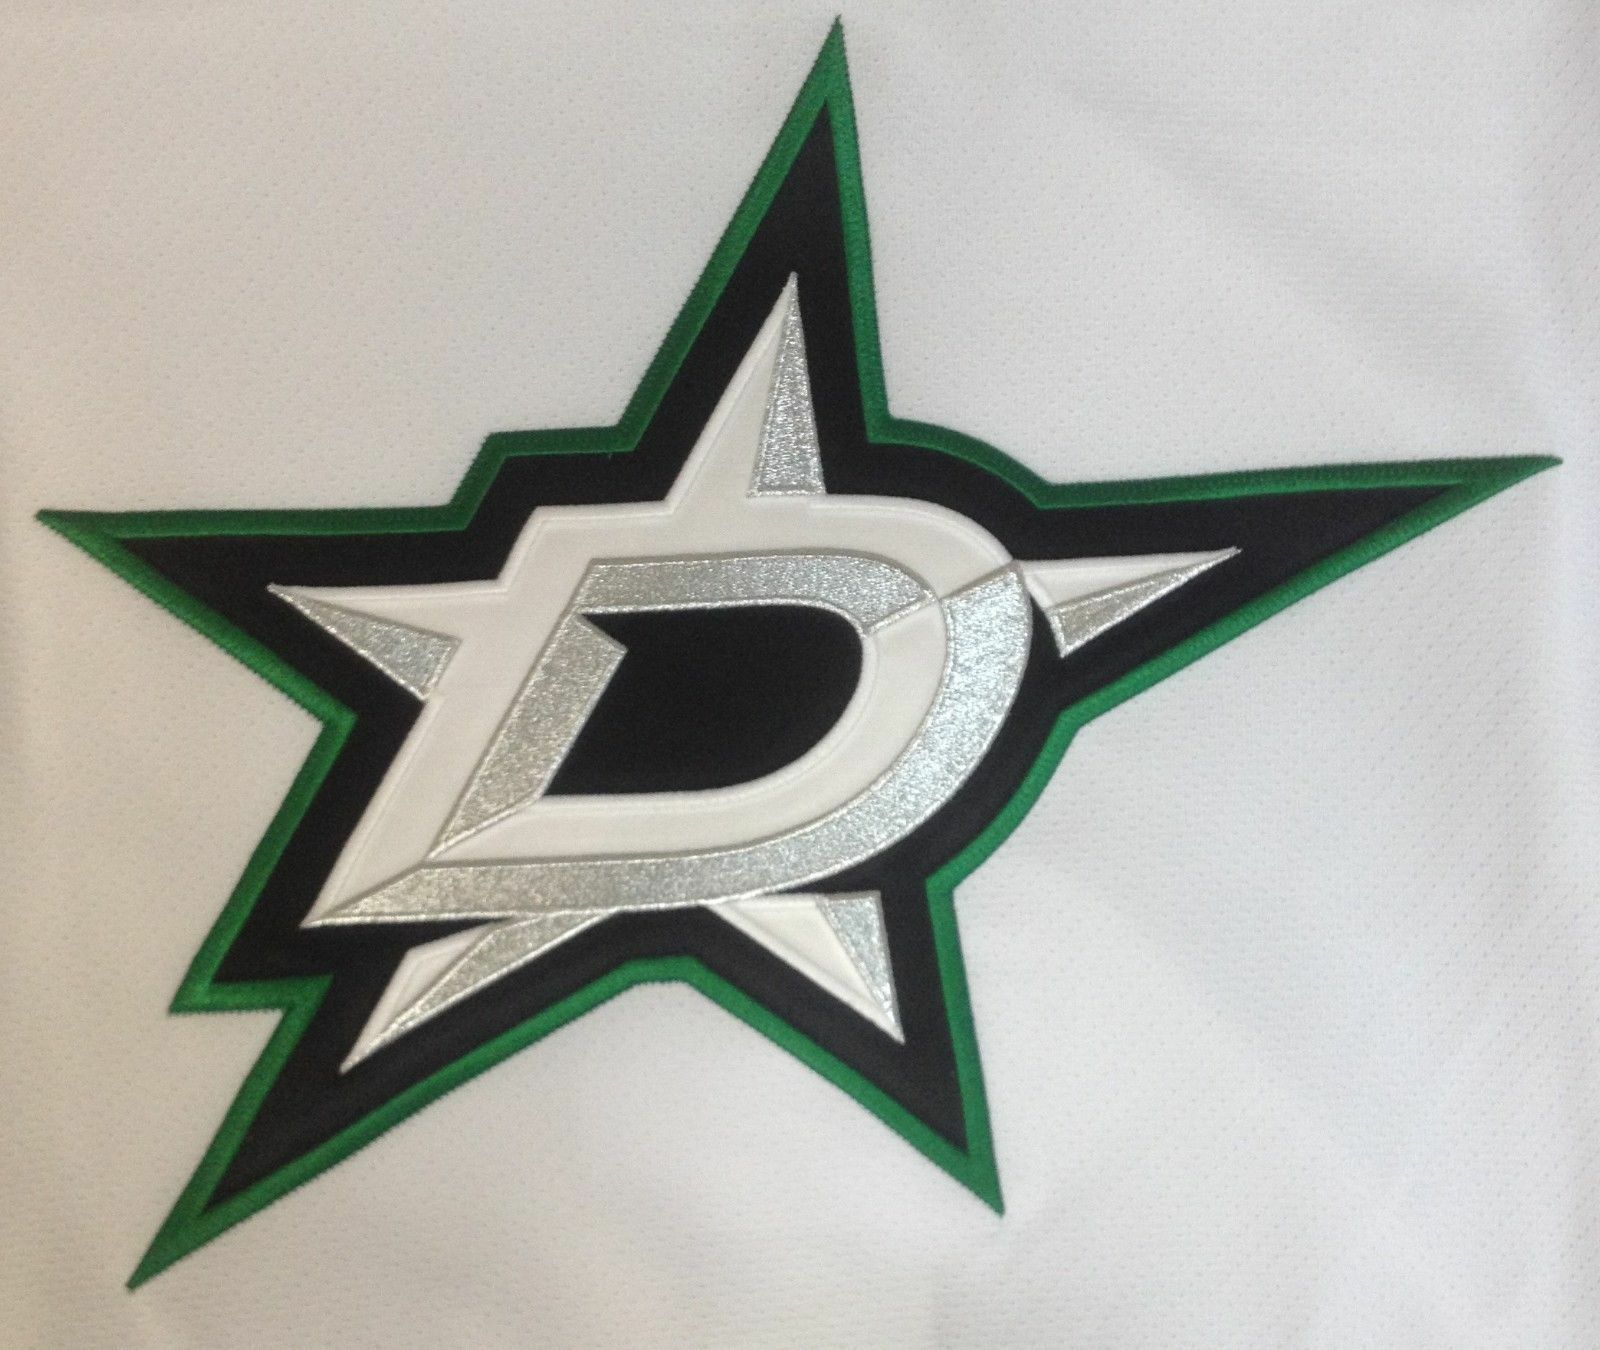 DALLAS STARS reebok NHL authentic EDGE 1.0 hockey jersey away-white size 50 NEW Image 6